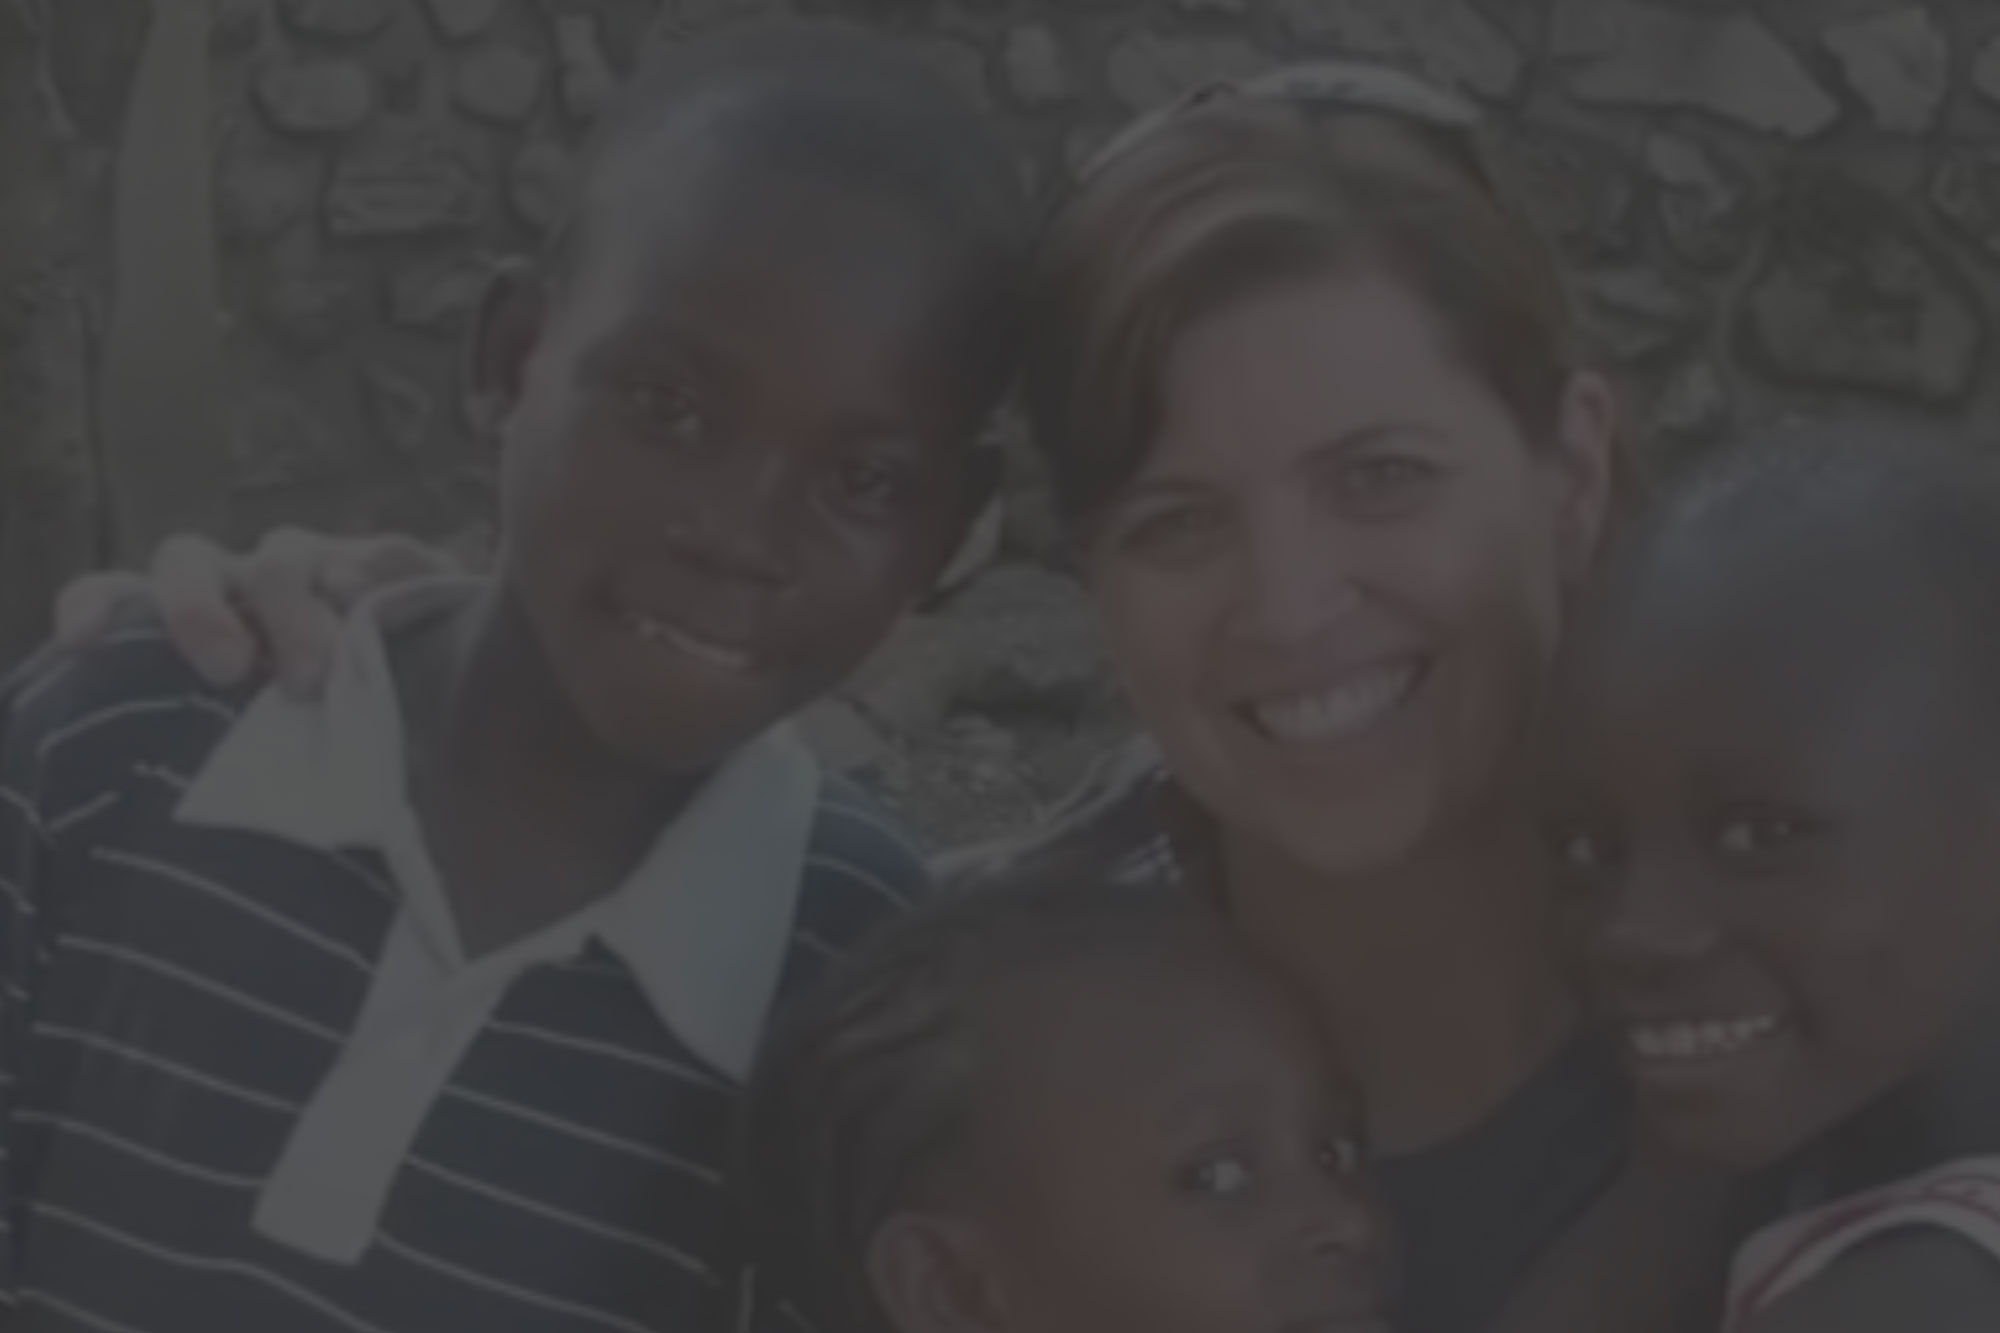 Wunderli Family’s Haiti Story